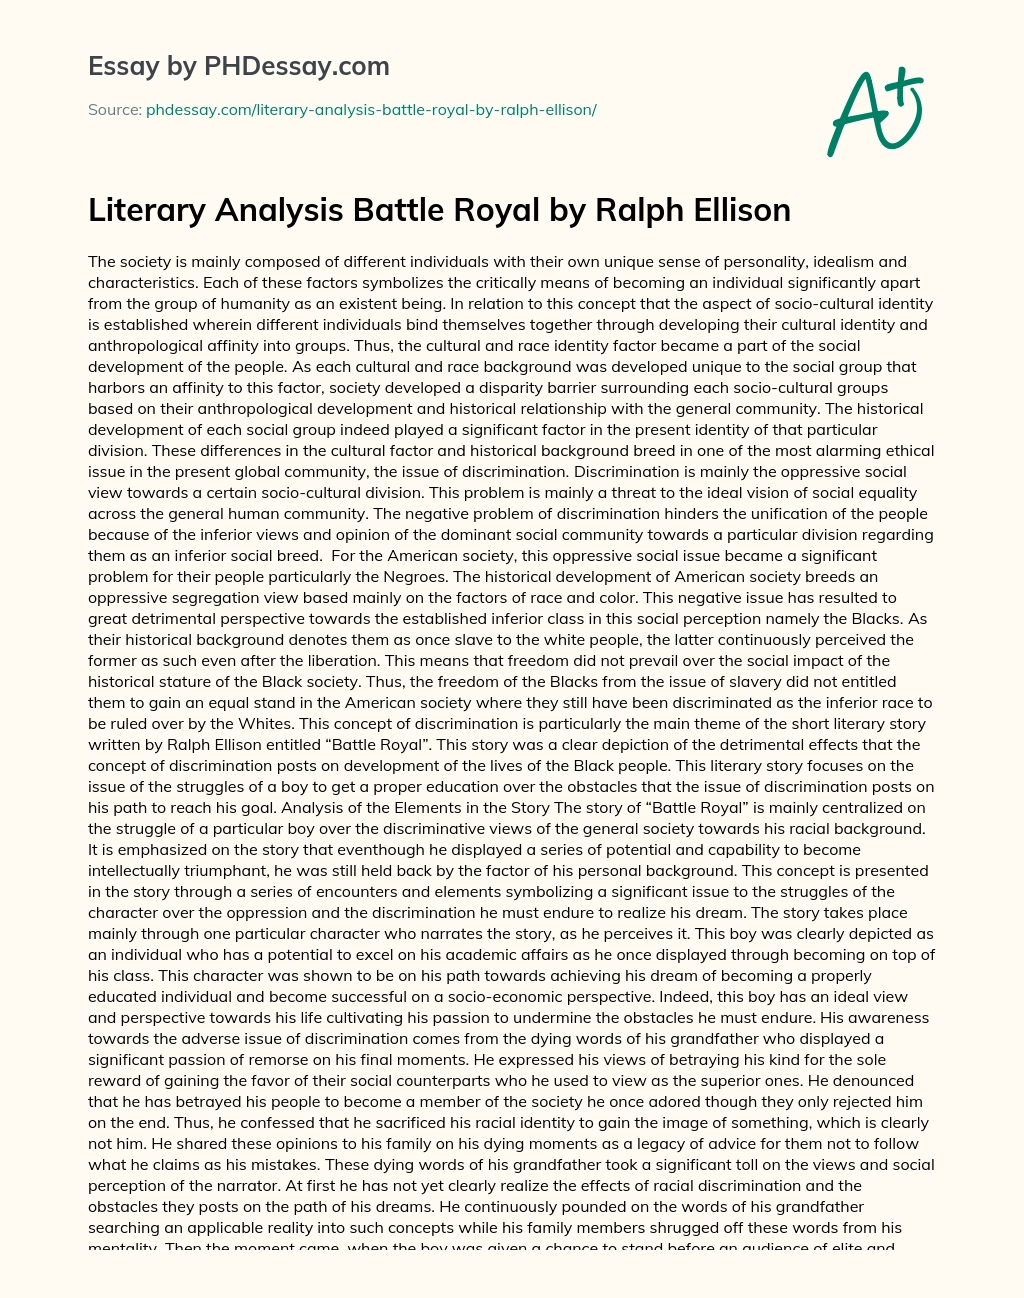 Literary Analysis Battle Royal by Ralph Ellison essay